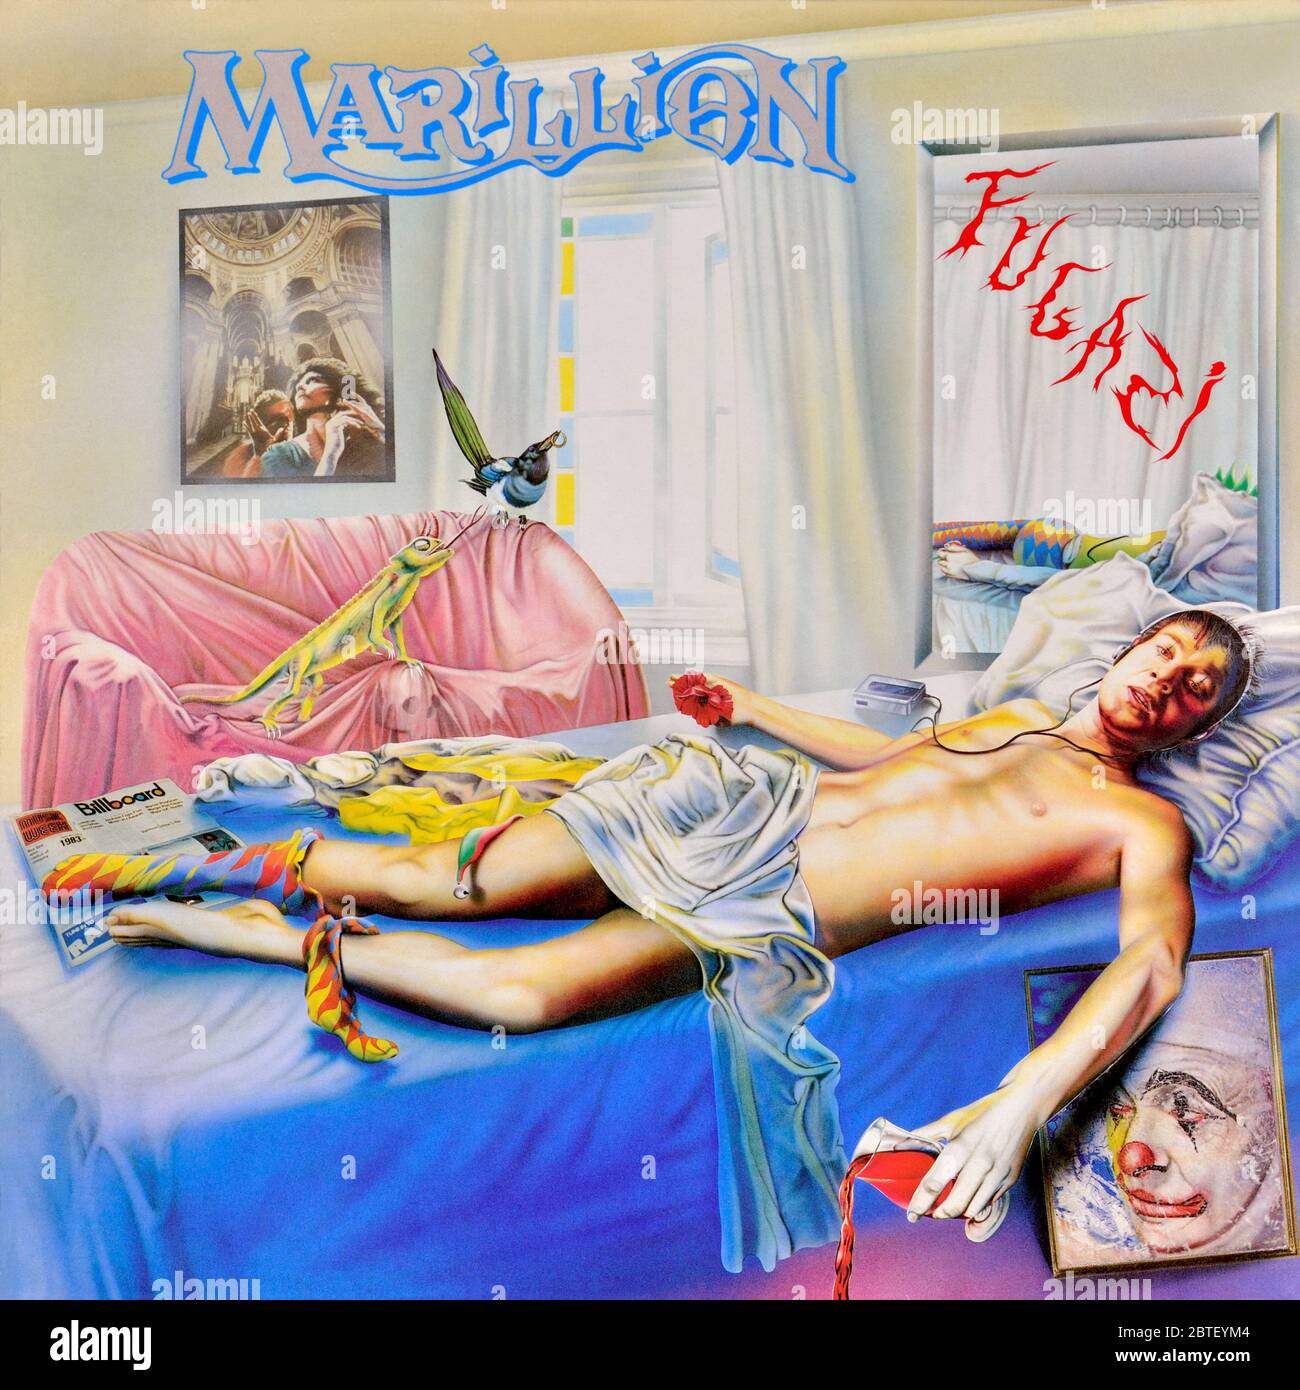 Marillion - original Vinyl Album Cover - Fugazi - 1984 Stockfoto